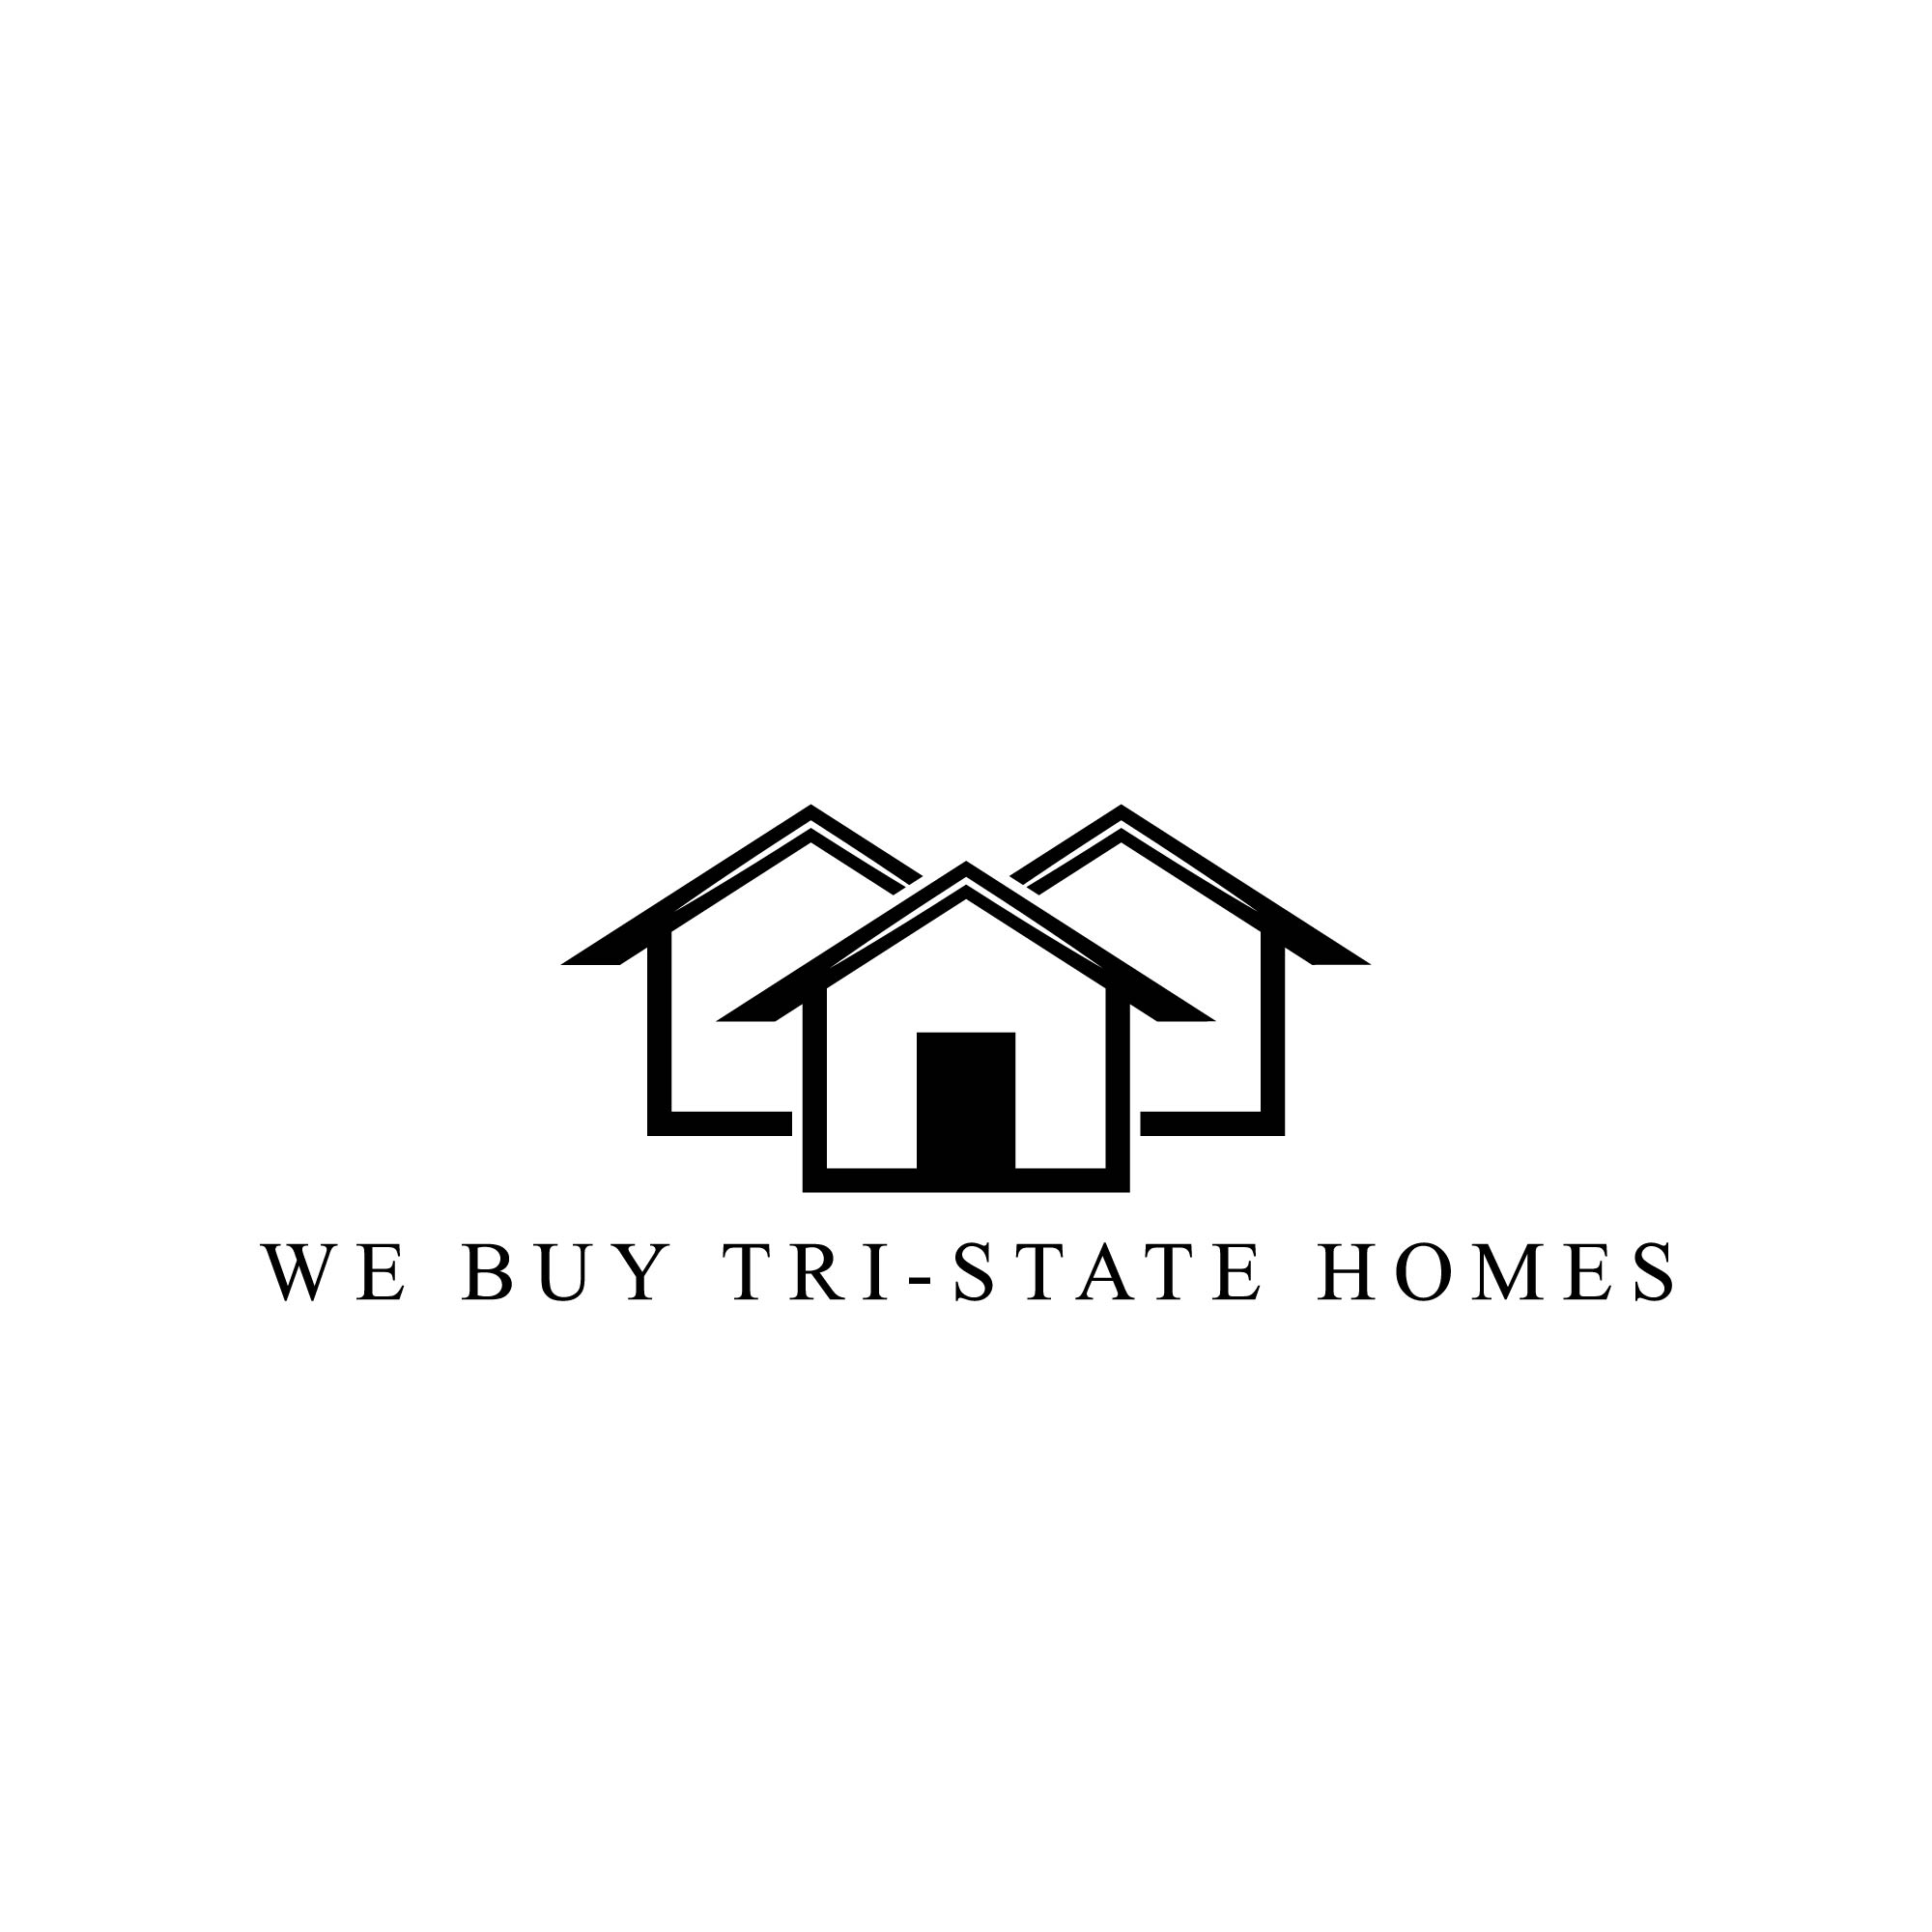 We Buy Tri-State Homes